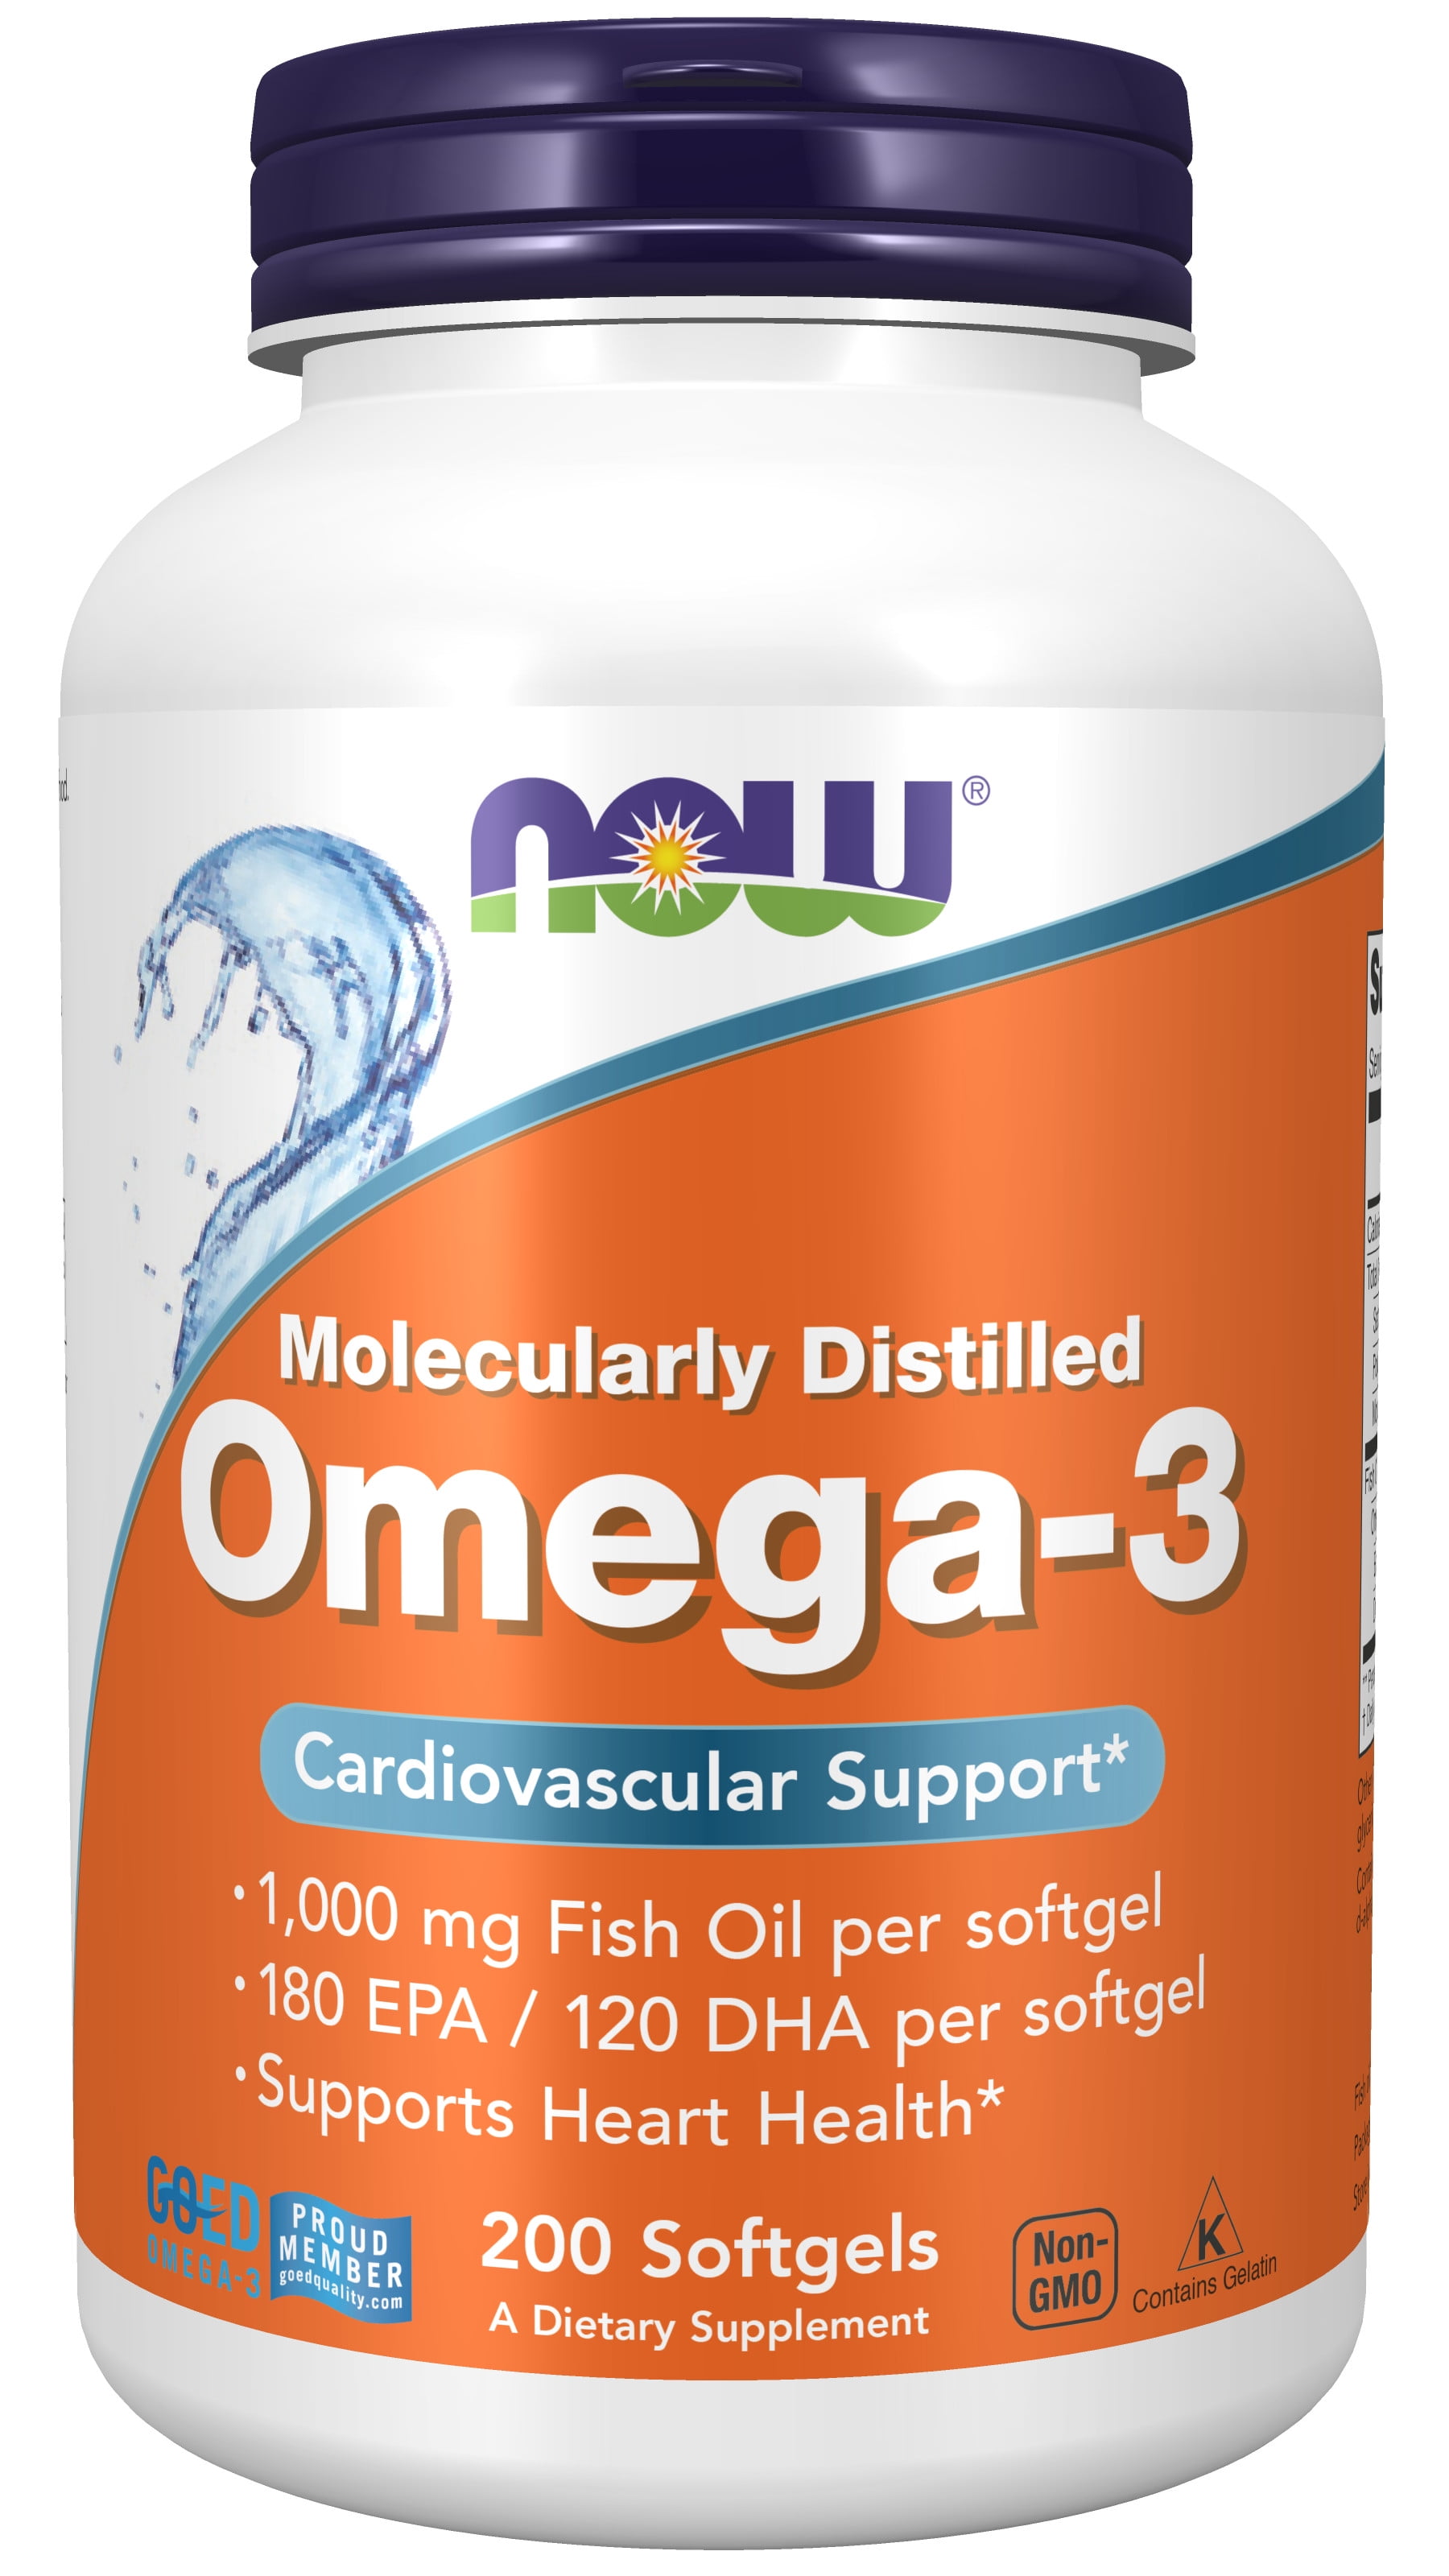 Alpha omega supplements